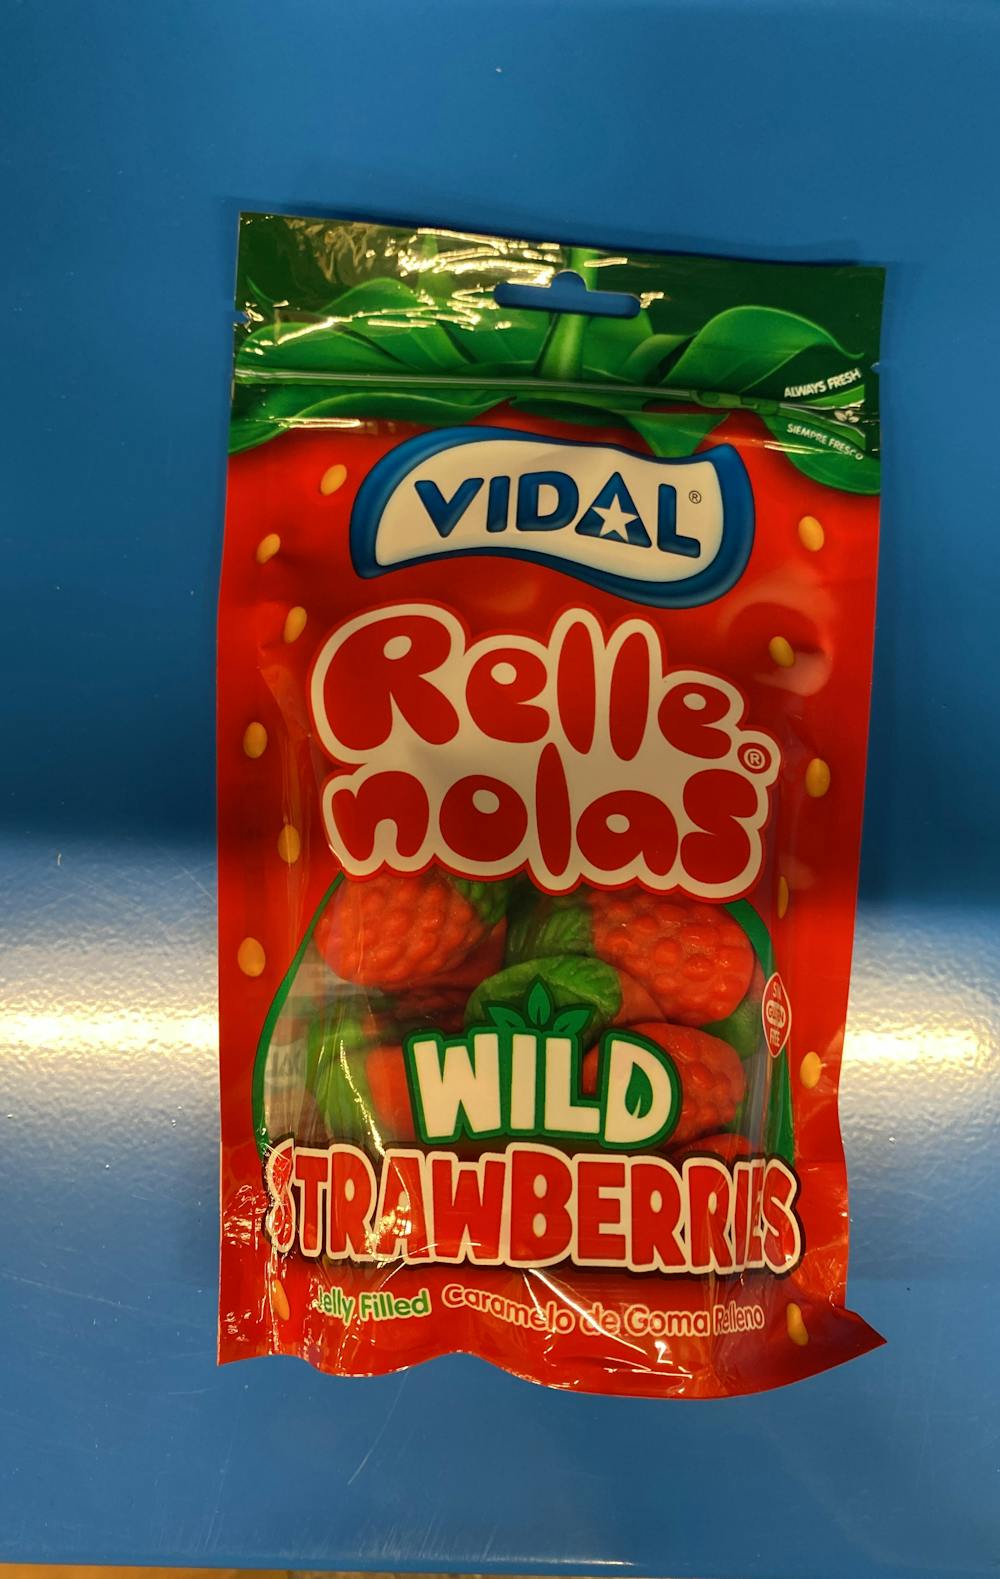 Relle nolas wild strawberries, Vidal 